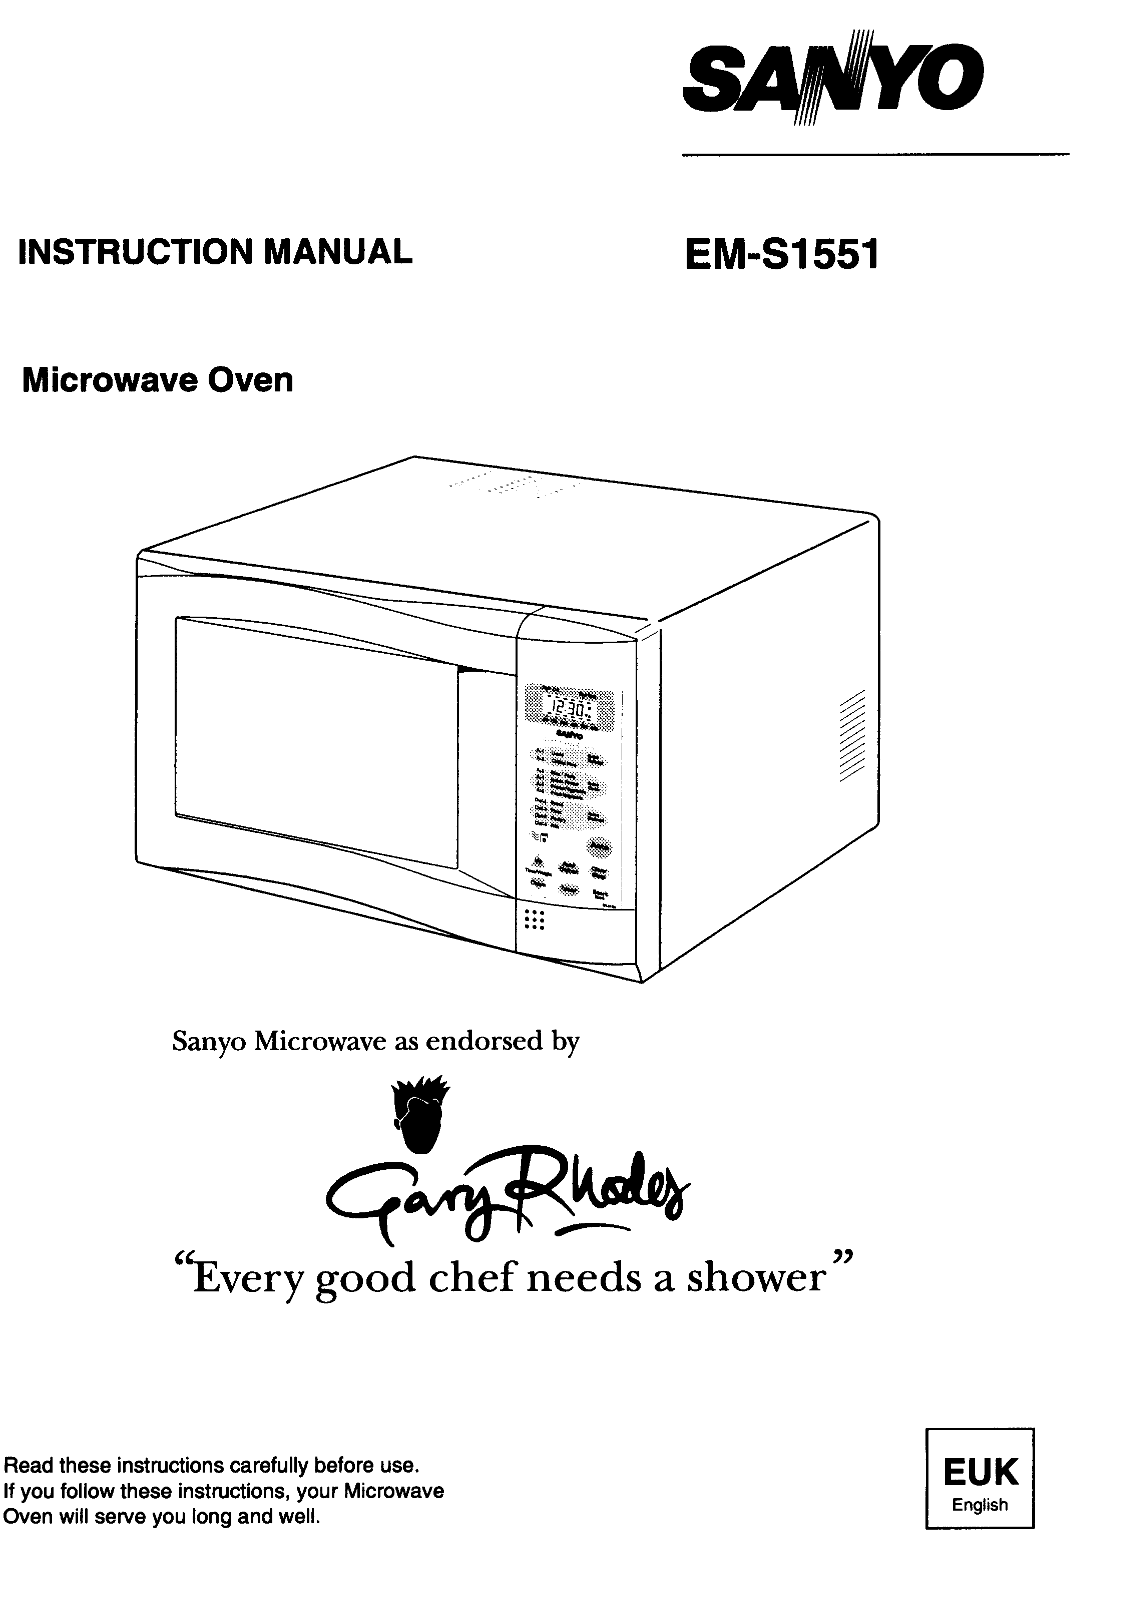 Sanyo EM-S1551 Instruction Manual